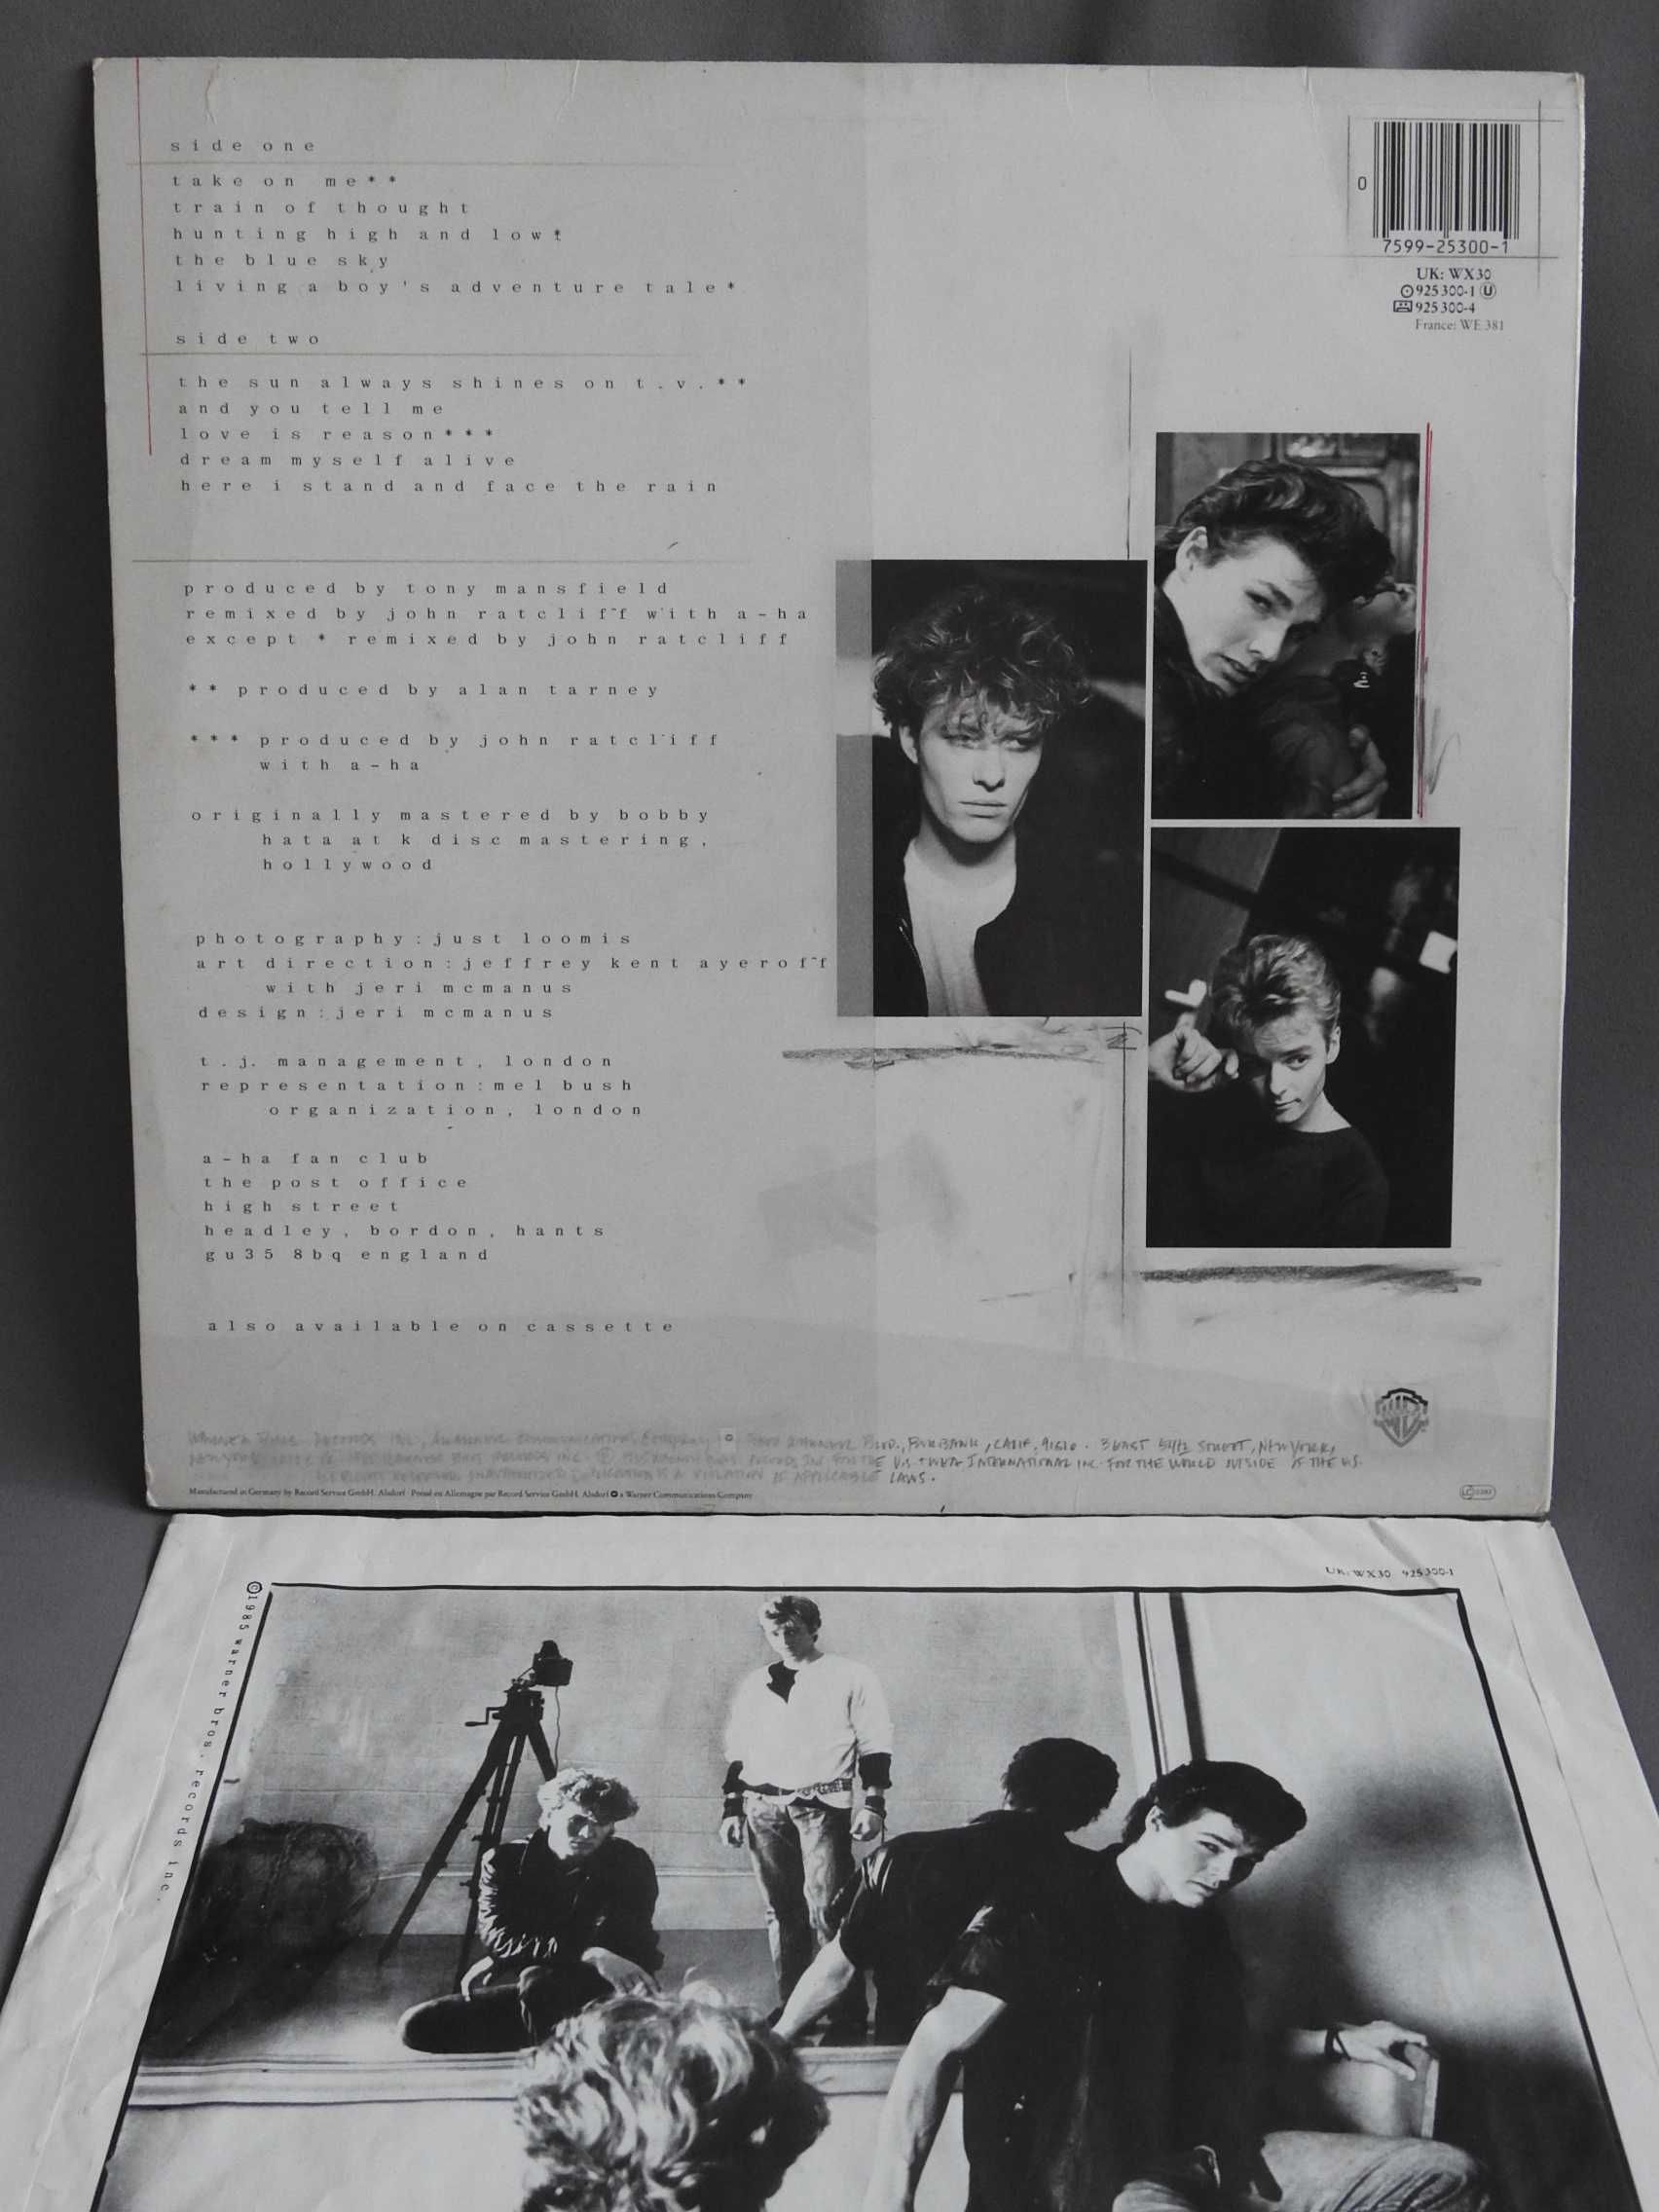 A-ha Hunting High And Low ‎LP 1985 Europe Германия пластинка EX 1press